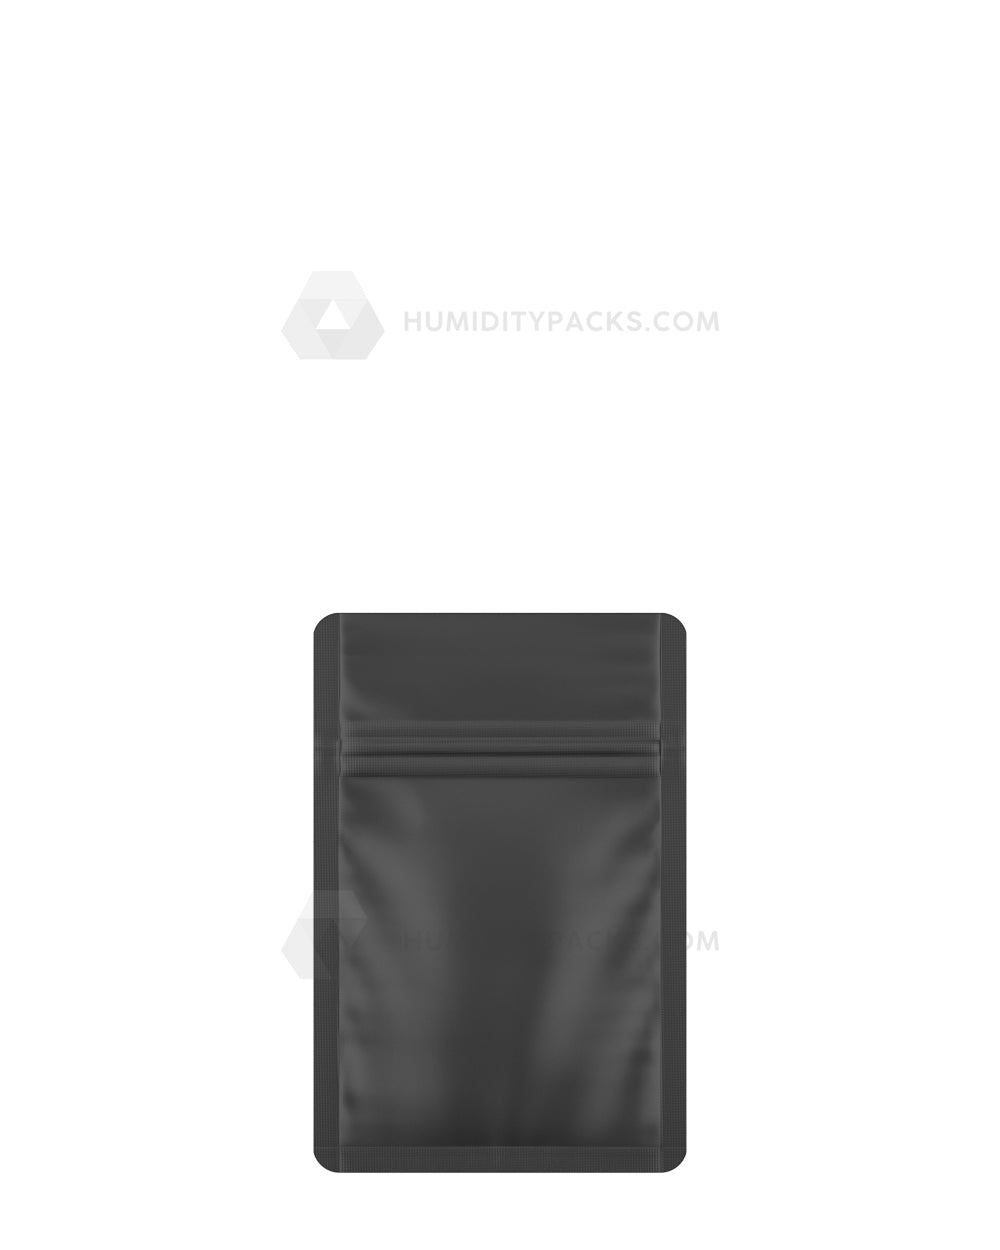 Mylar Bag Black With Window - 1 Lb Bag - 448 Grams — MJ Wholesale